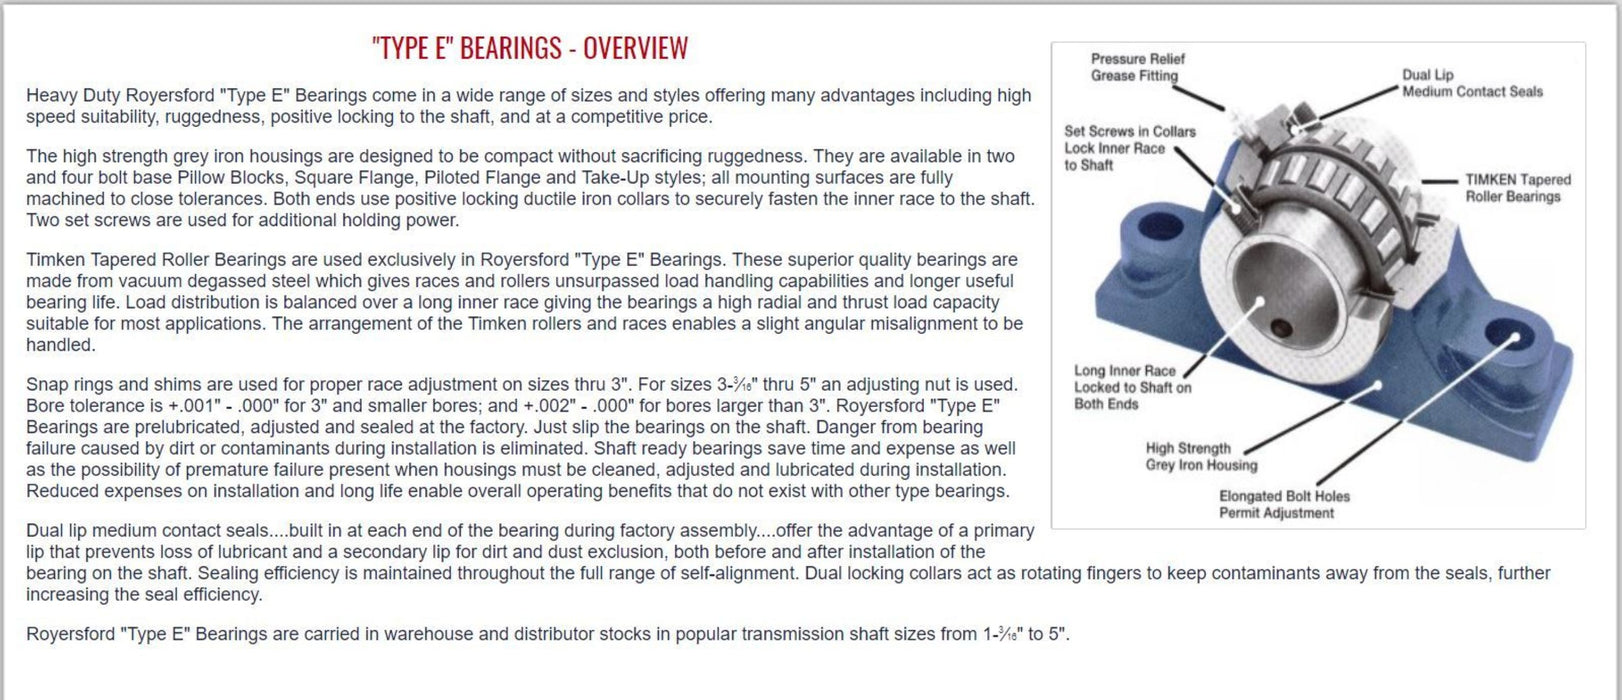 20-02-0112, Royersford TYPE E Pillow Block Bearing, 1-3/4 with Timken Tapered Roller Bearings